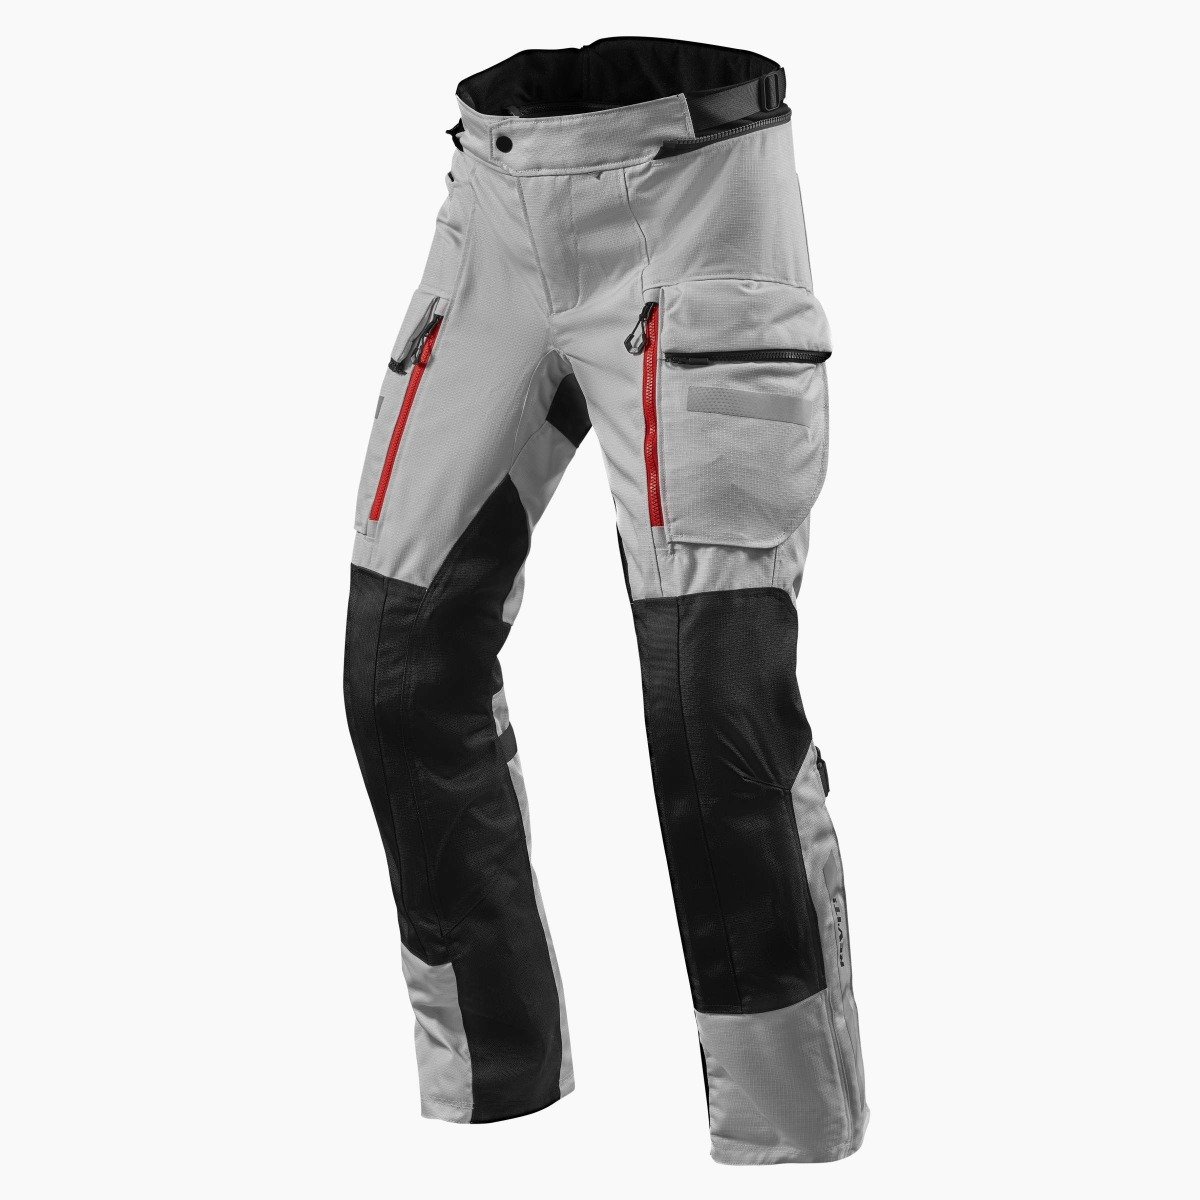 Image of REV'IT! Sand 4 H2O Short Silver Black Motorcycle Pants Size M EN